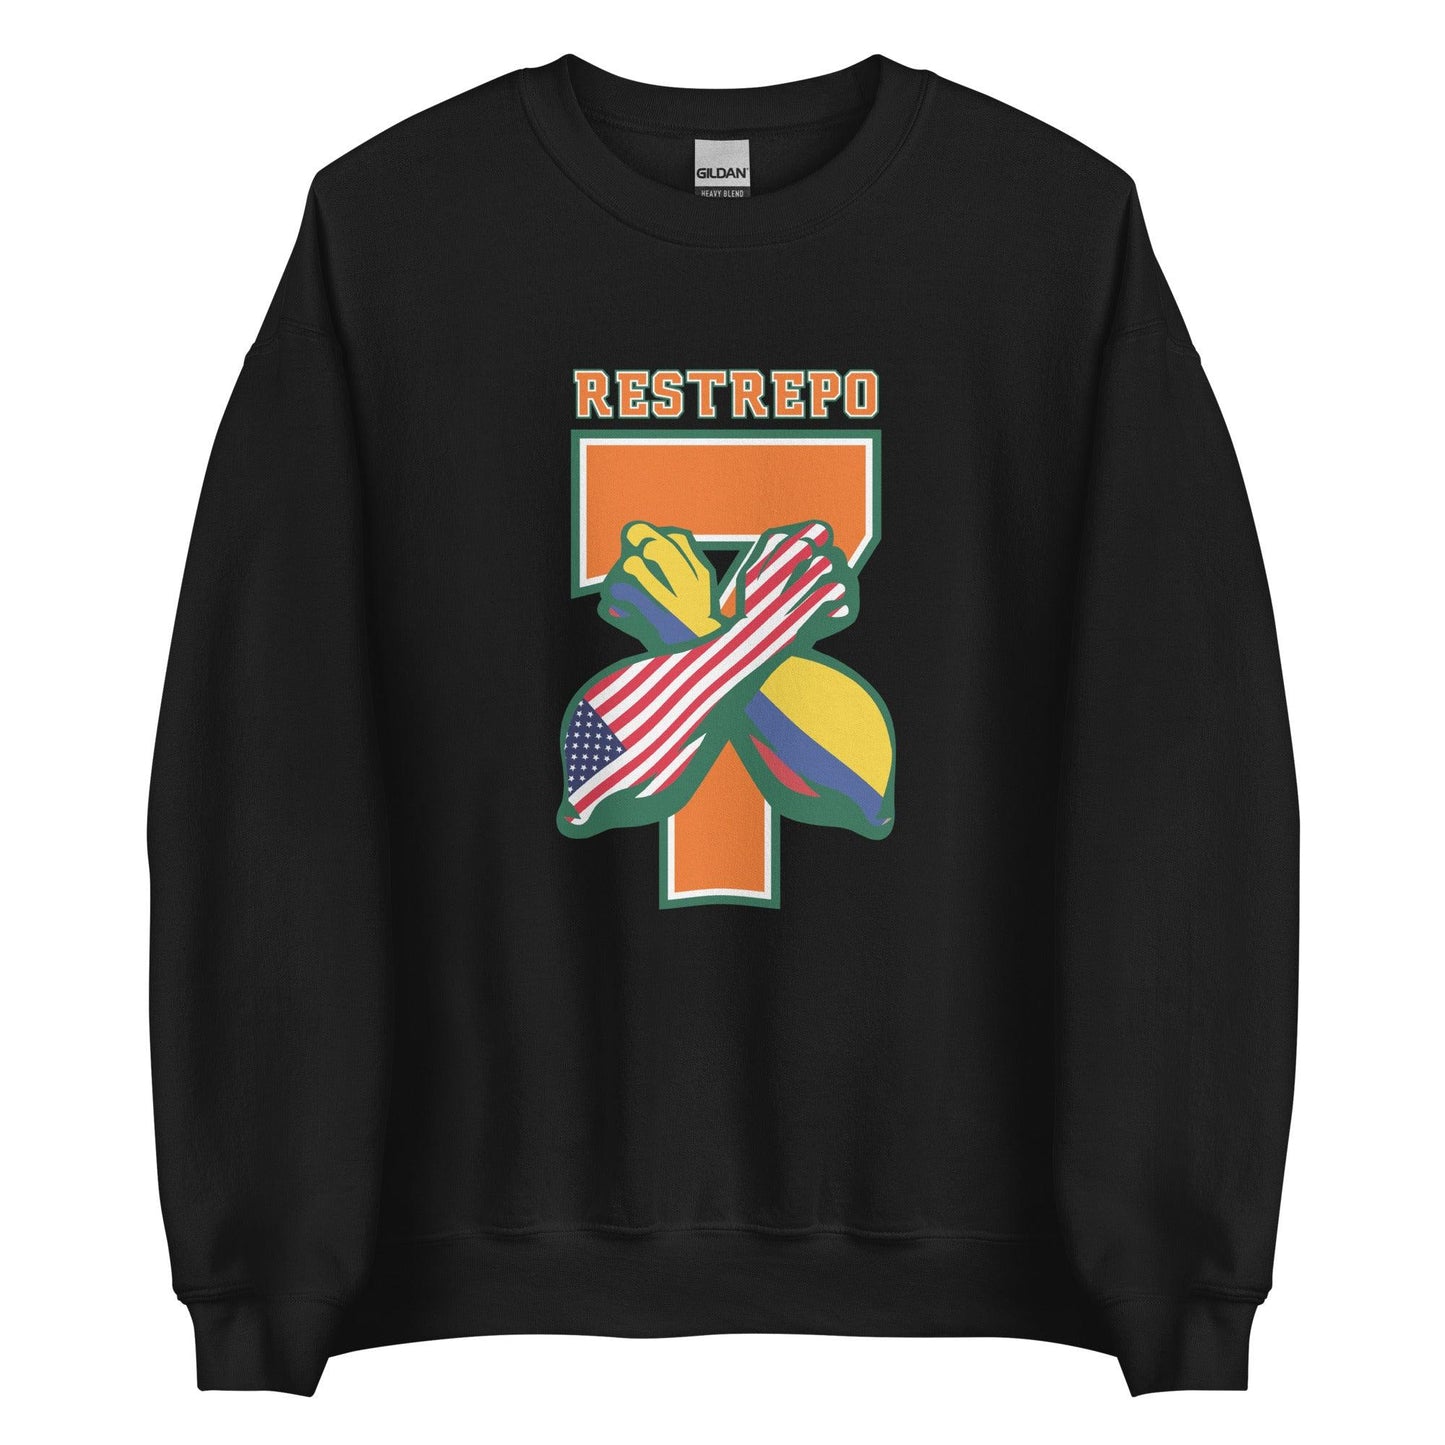 Xavier Restrepo "Represent" Sweatshirt - Fan Arch